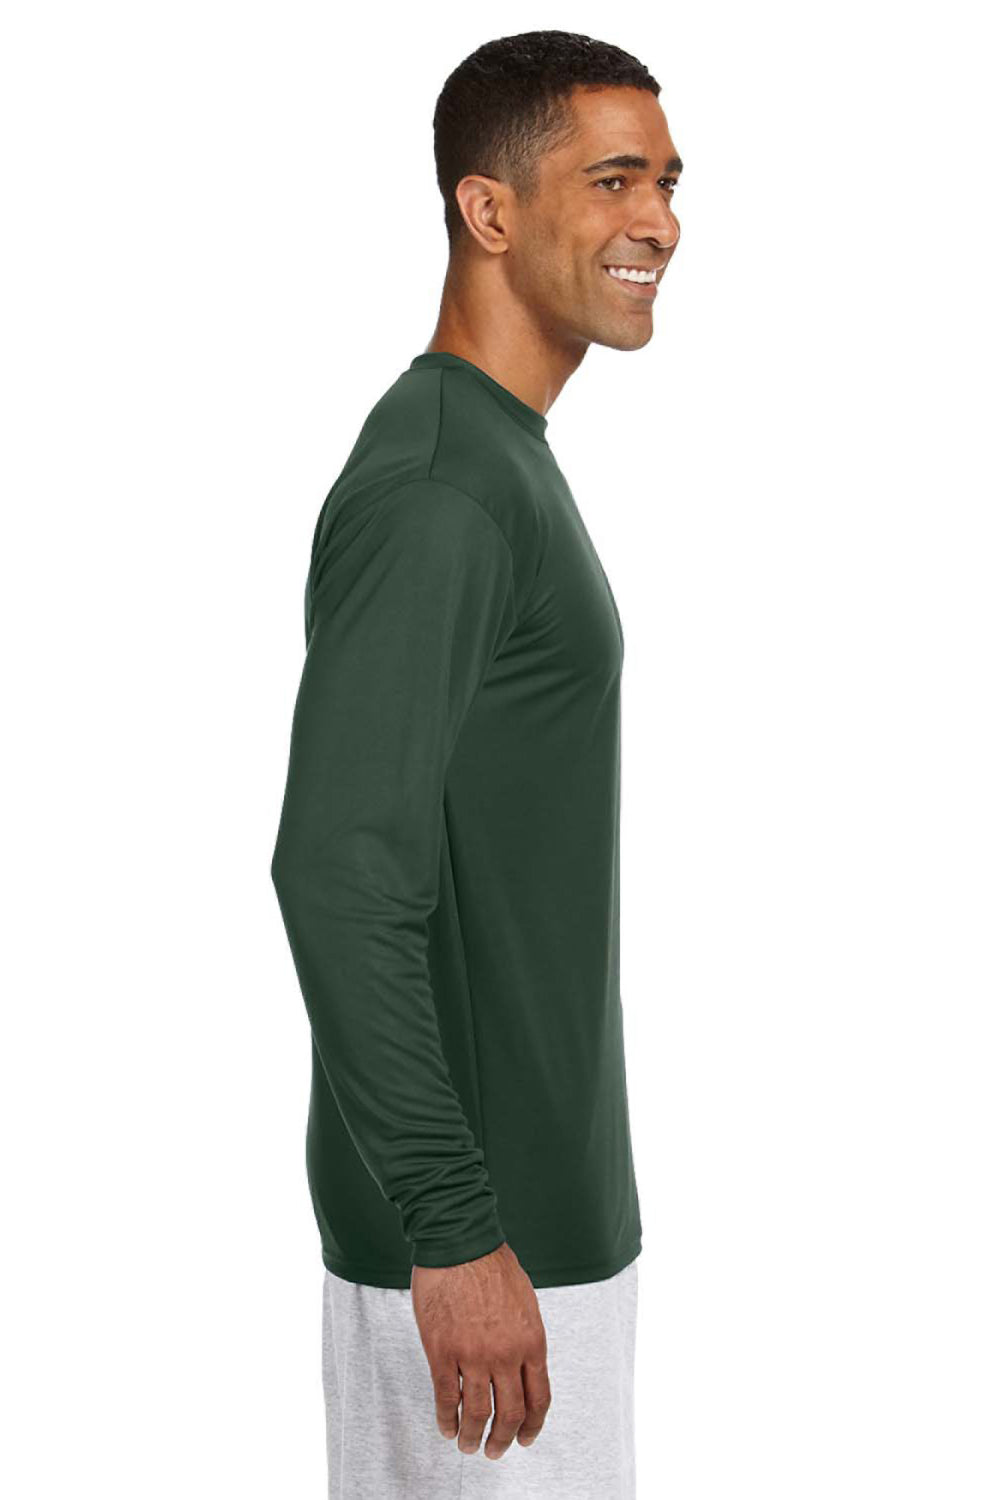 A4 N3165 Mens Performance Moisture Wicking Long Sleeve Crewneck T-Shirt Forest Green Model Side